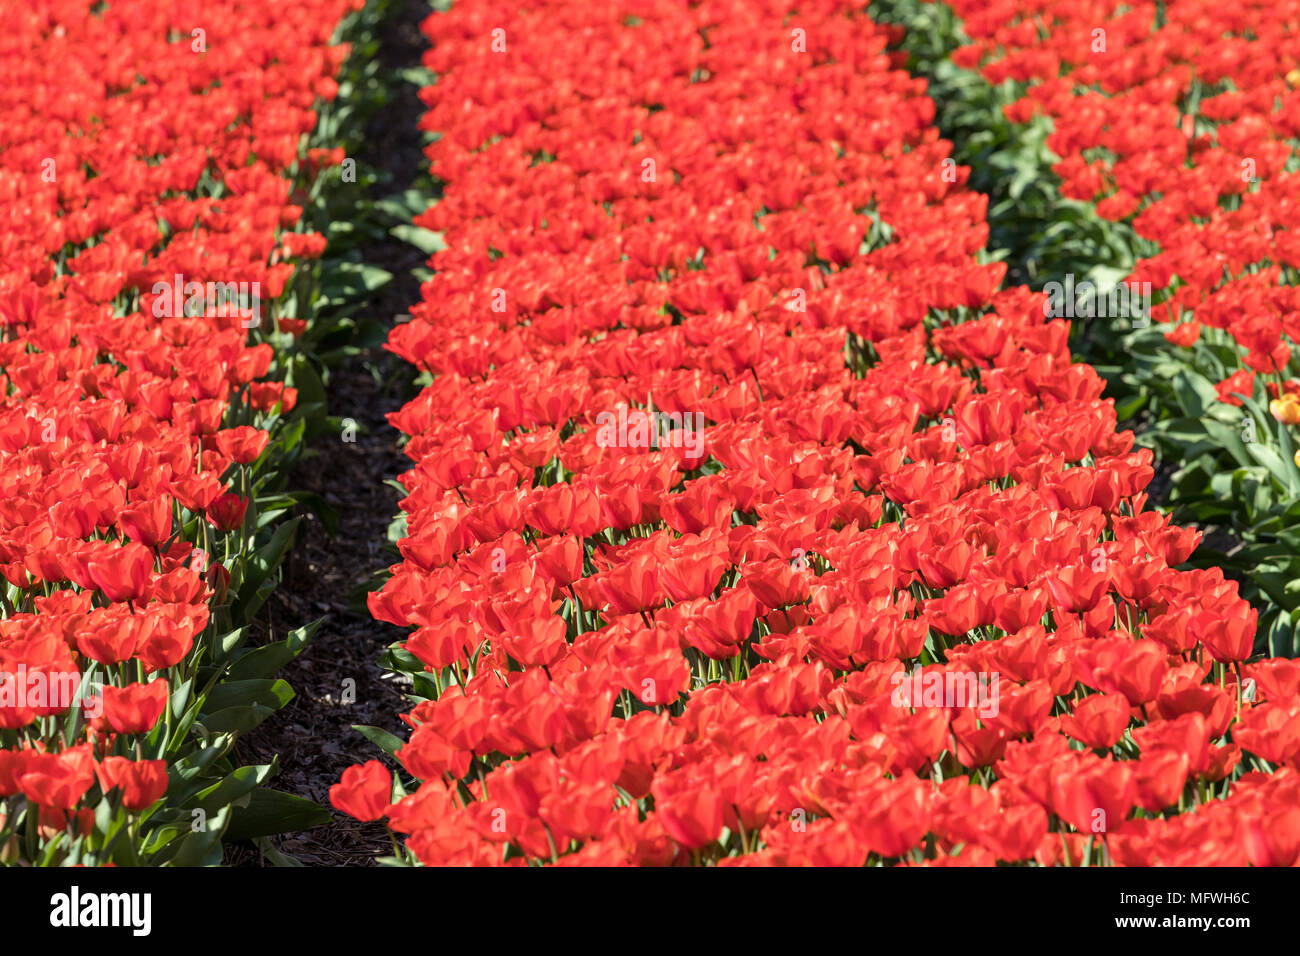 Campo di tulipani nei Paesi Bassi Foto Stock